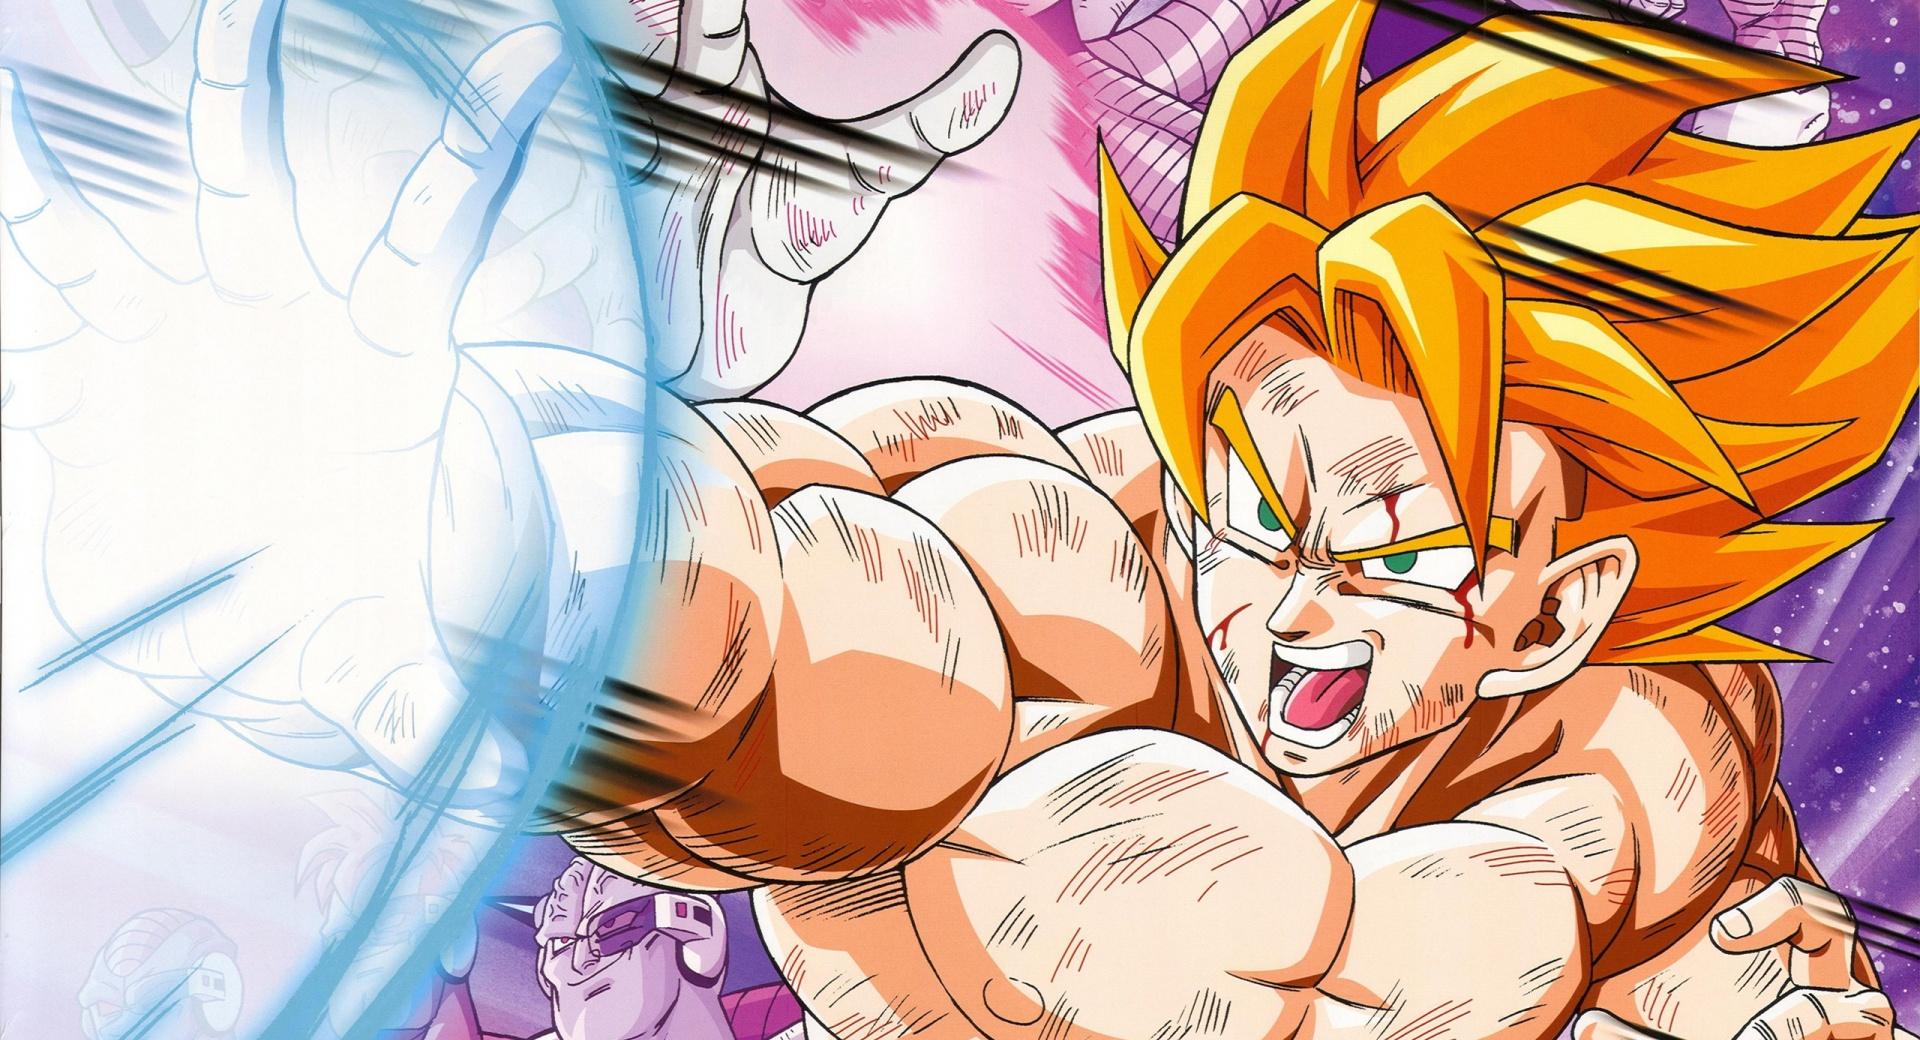 Dragon Ball Z - Super Saiyan Goku at 2048 x 2048 iPad size wallpapers HD quality